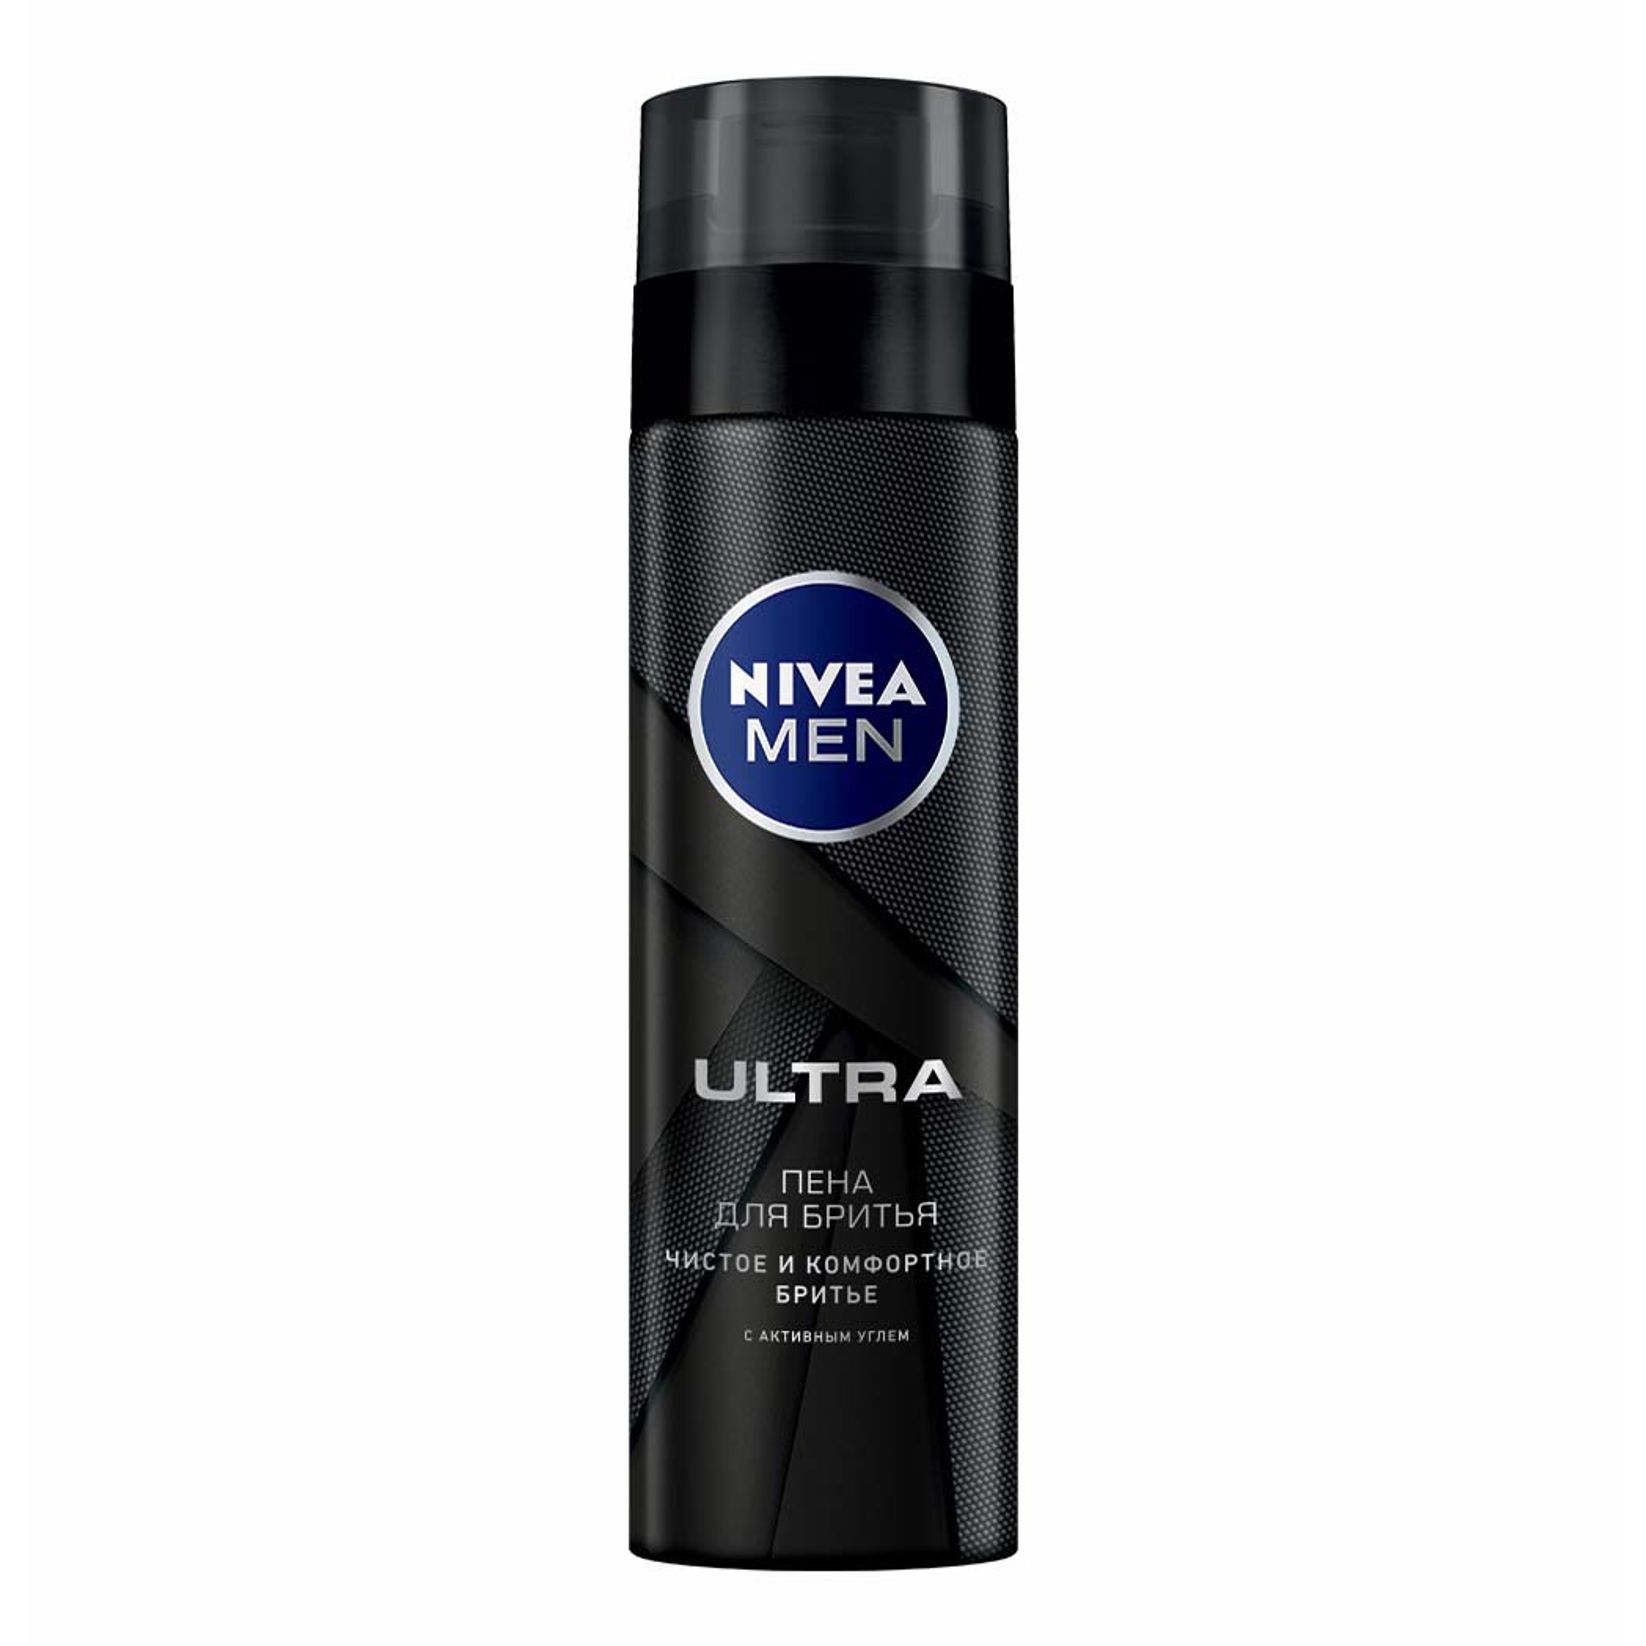 NIVEA MEN Пена для бритья Ultra, 200 мл